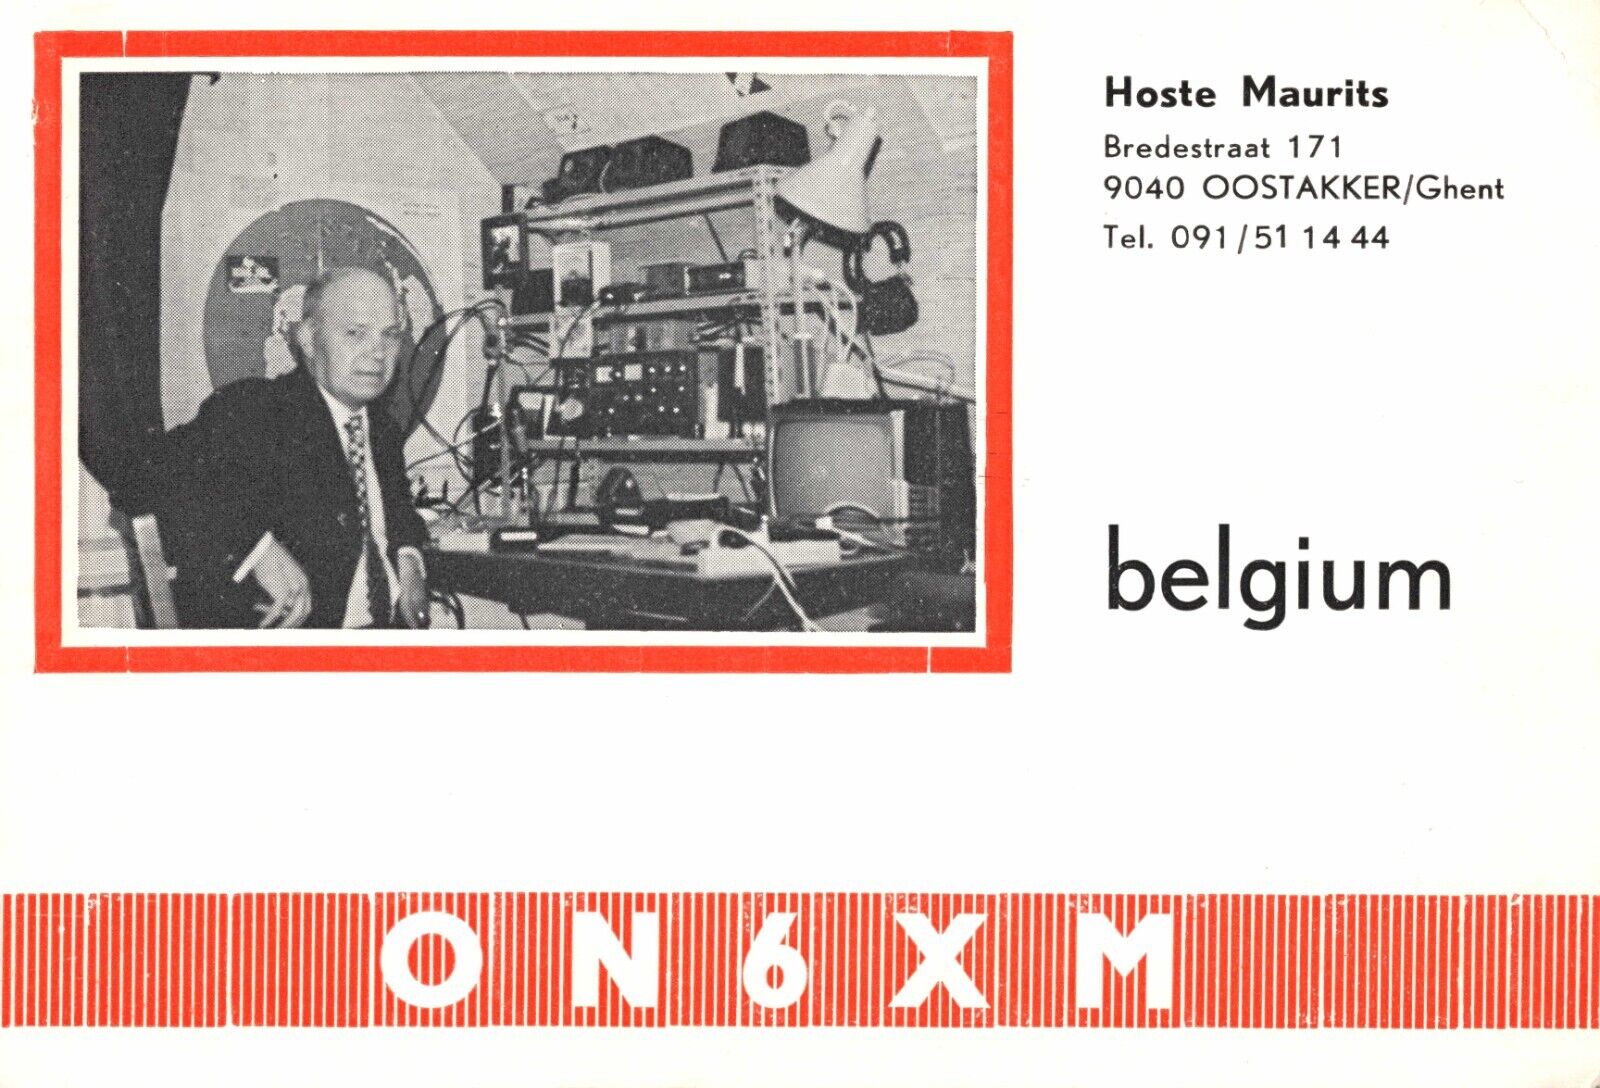 Hoste Maurits Belgium Amateur Ham Radio Equipment Vintage QSL Card Postcard Size